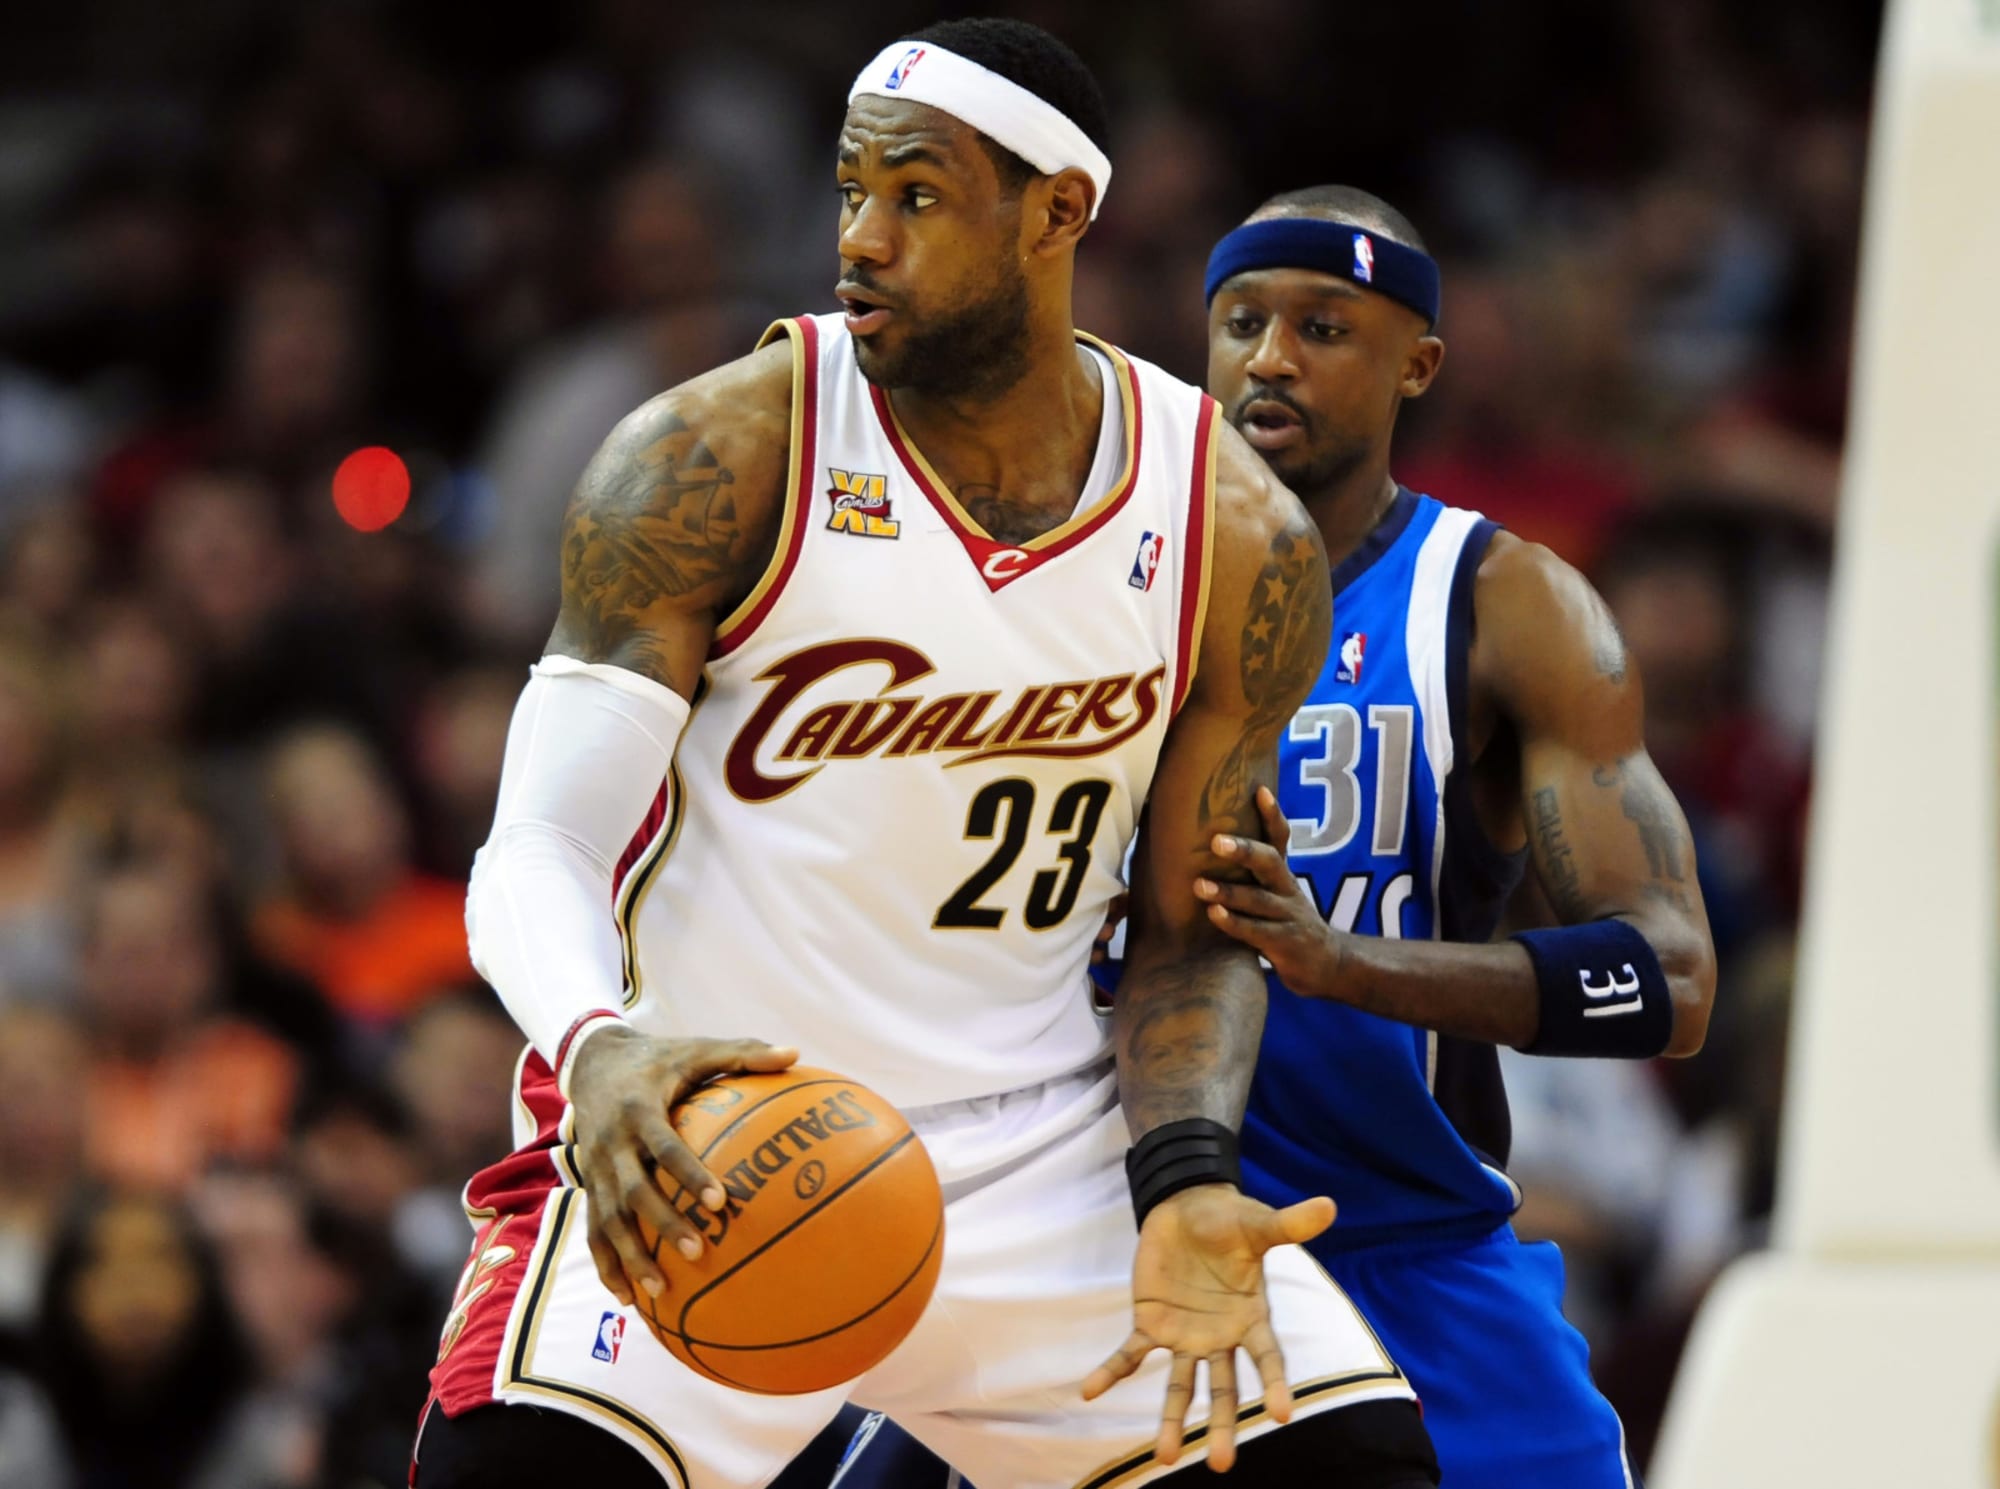 Dallas Mavericks' Jason Terry (31) and Miami Heat's LeBron James